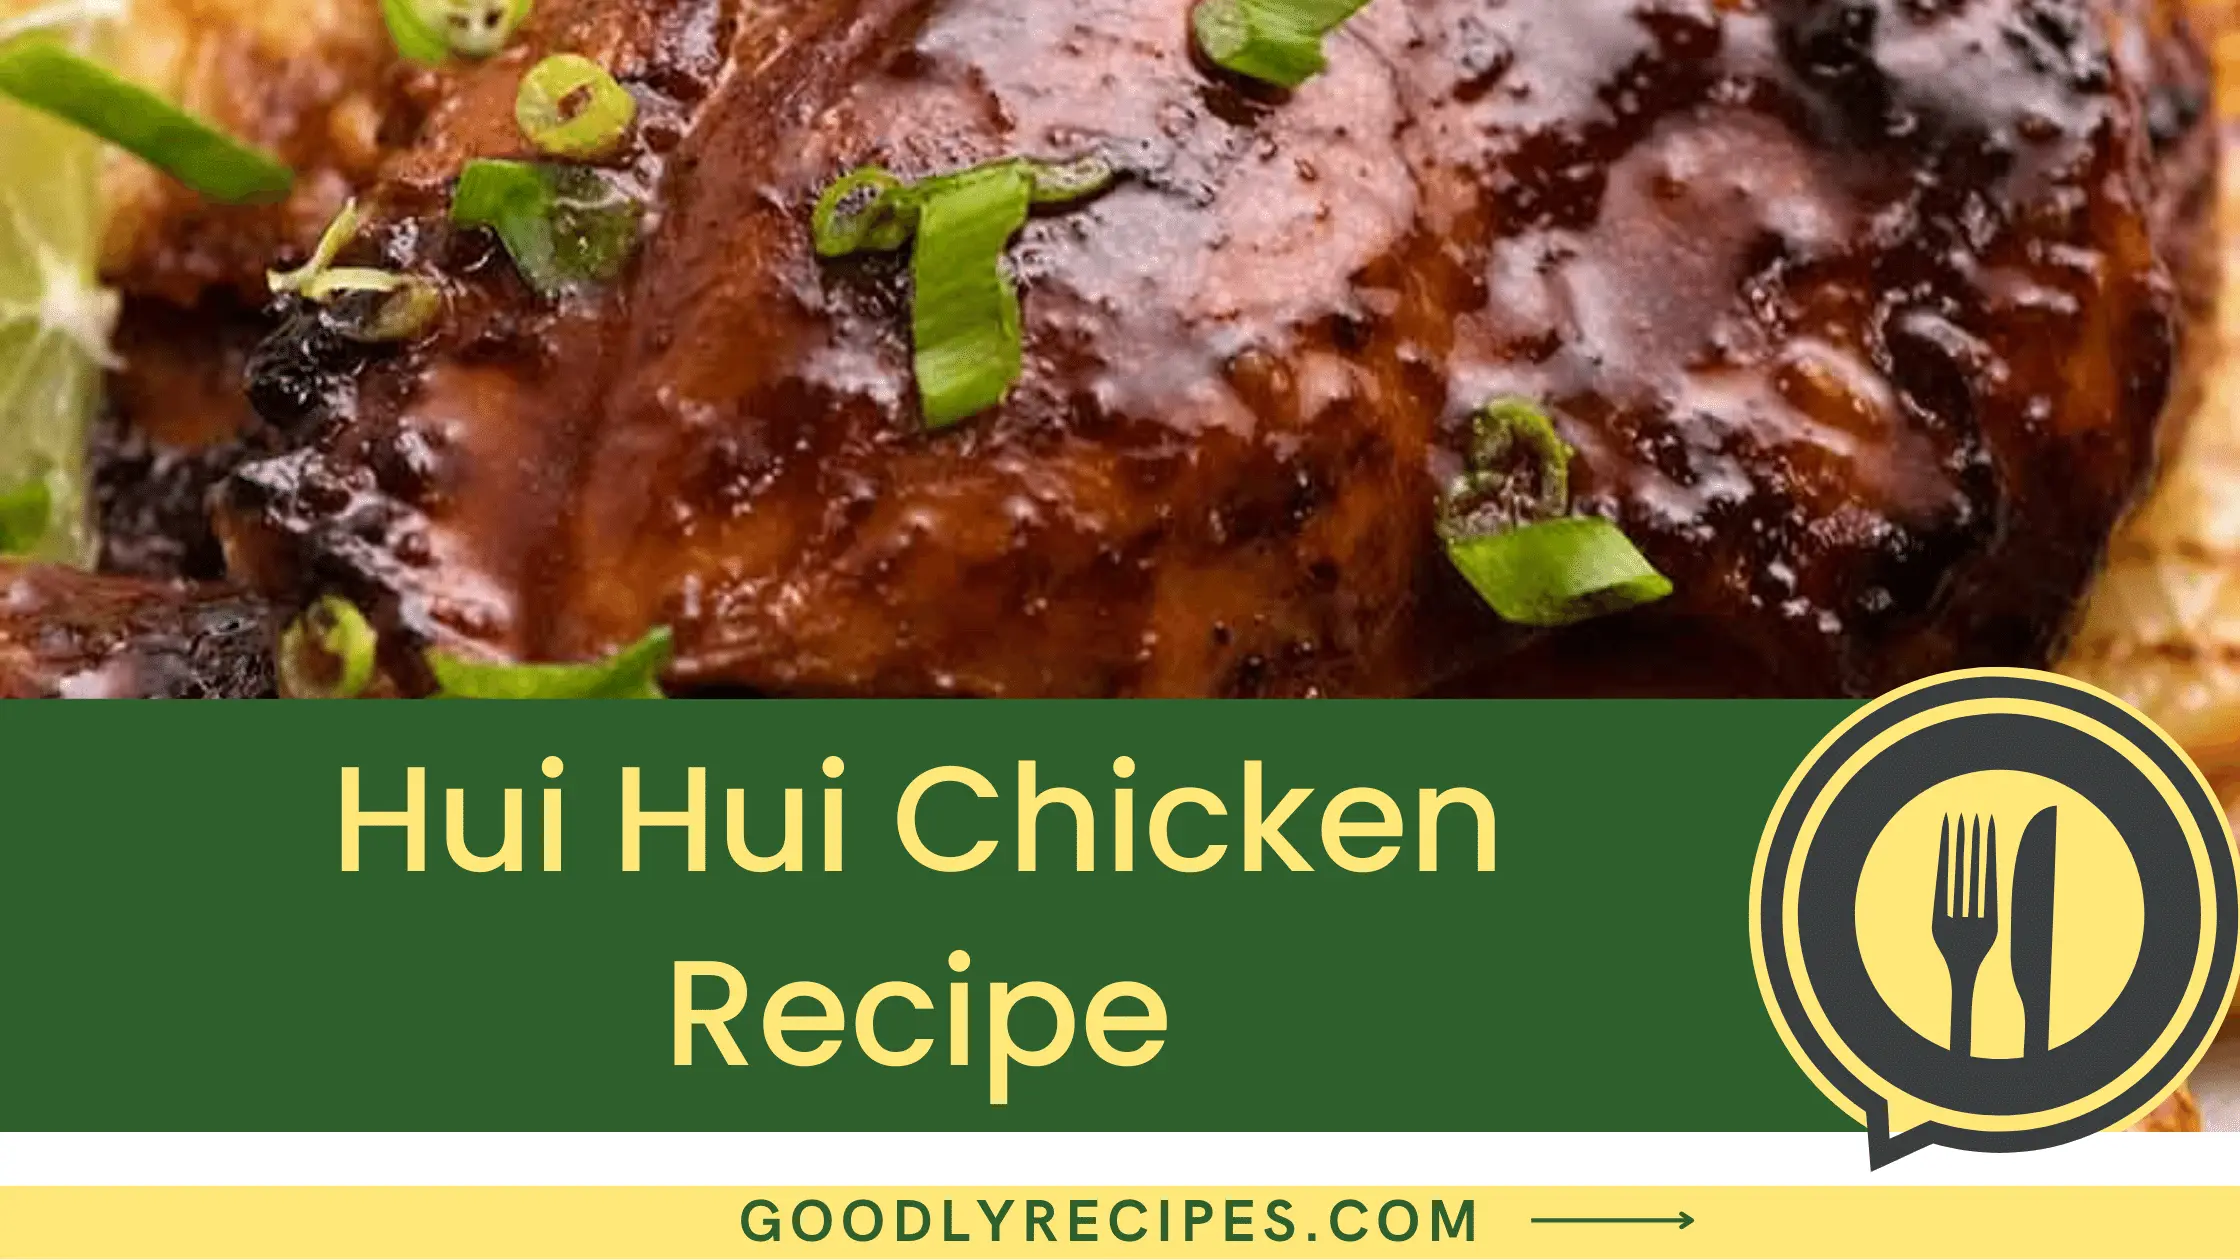 What Is Hui Hui Chicken?